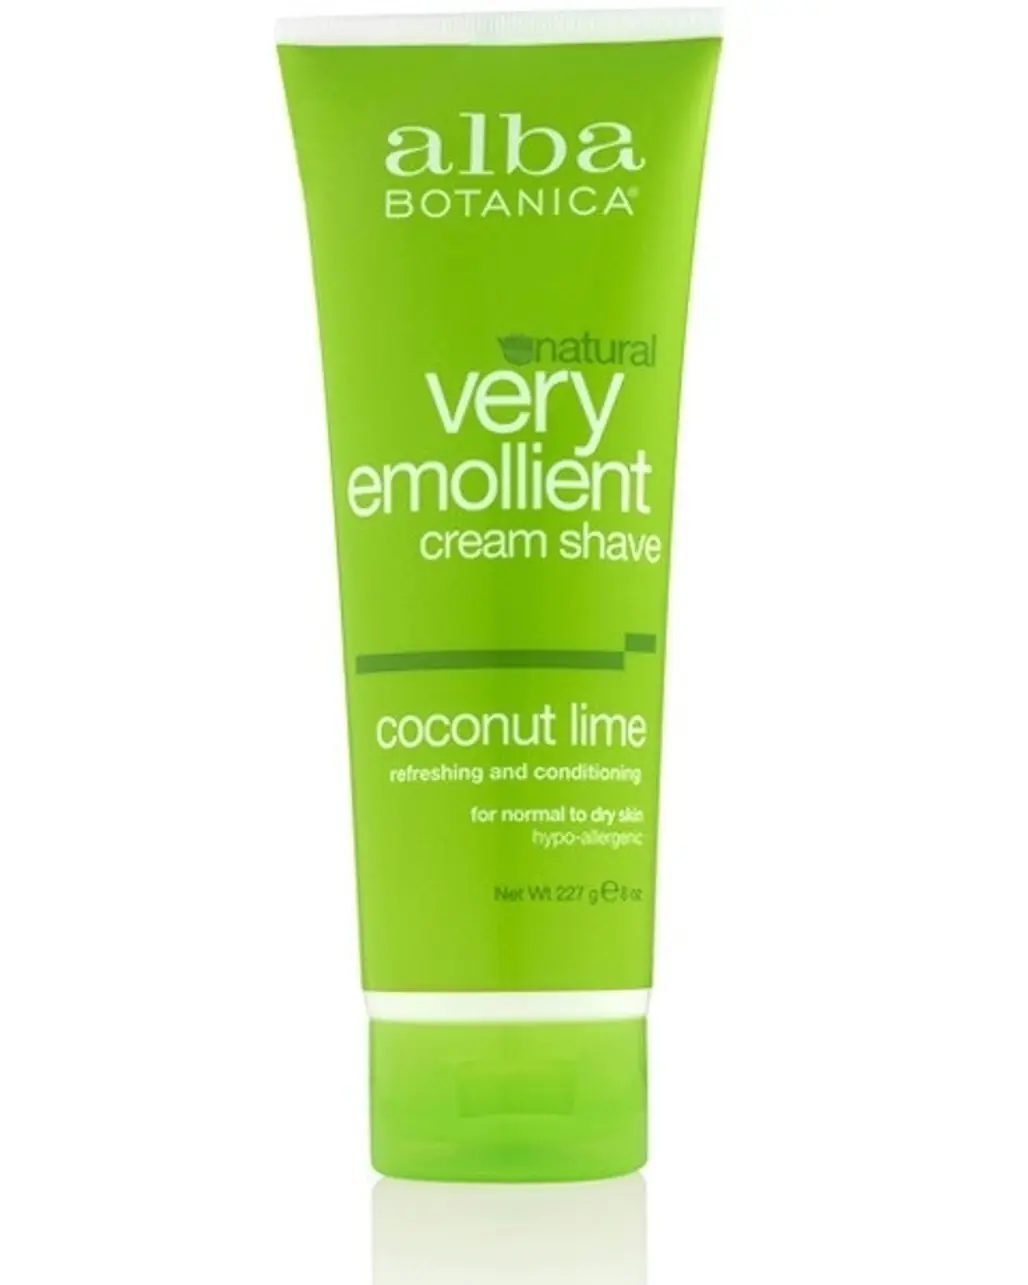 Alba Botanica Coconut Lime Cream Shave